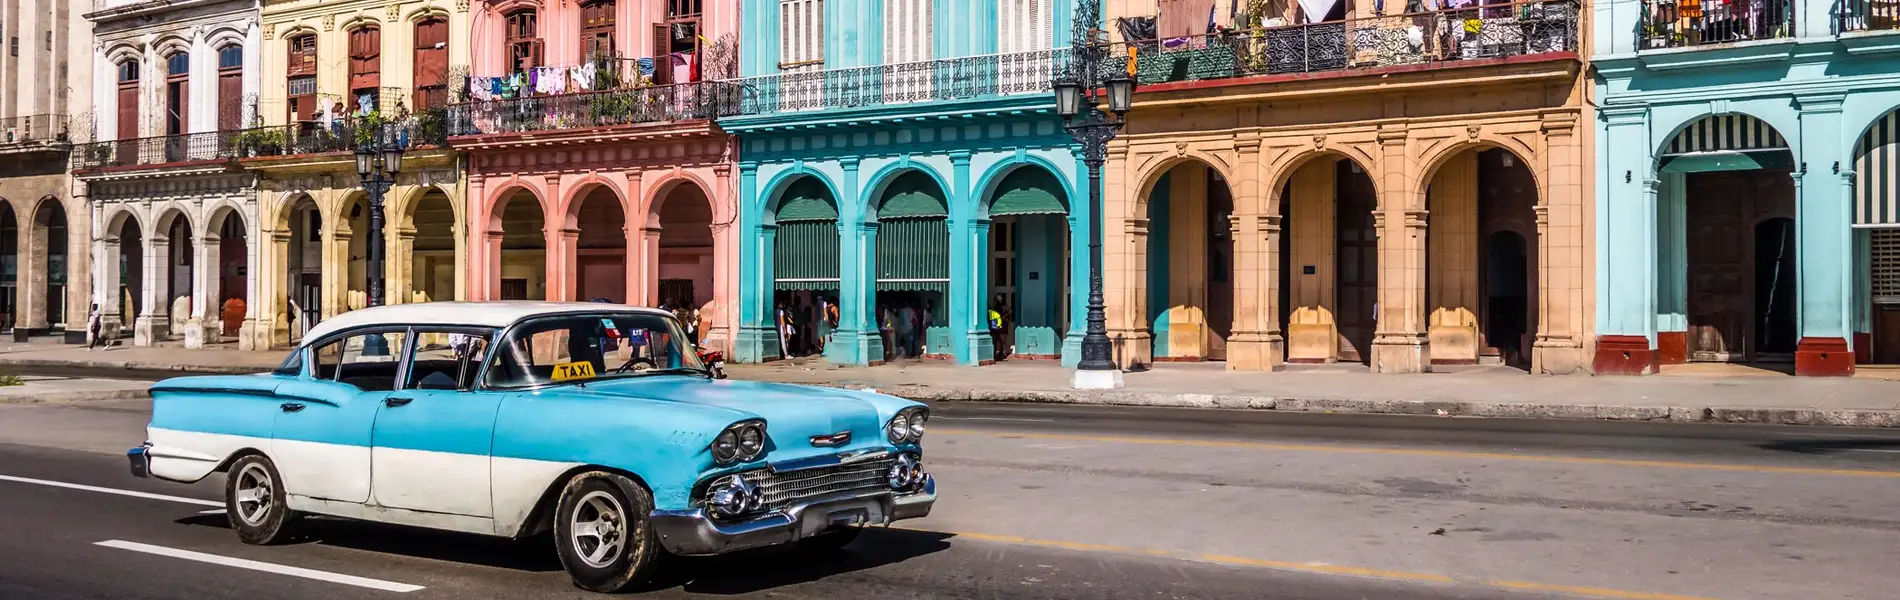 Havana (Cuba)